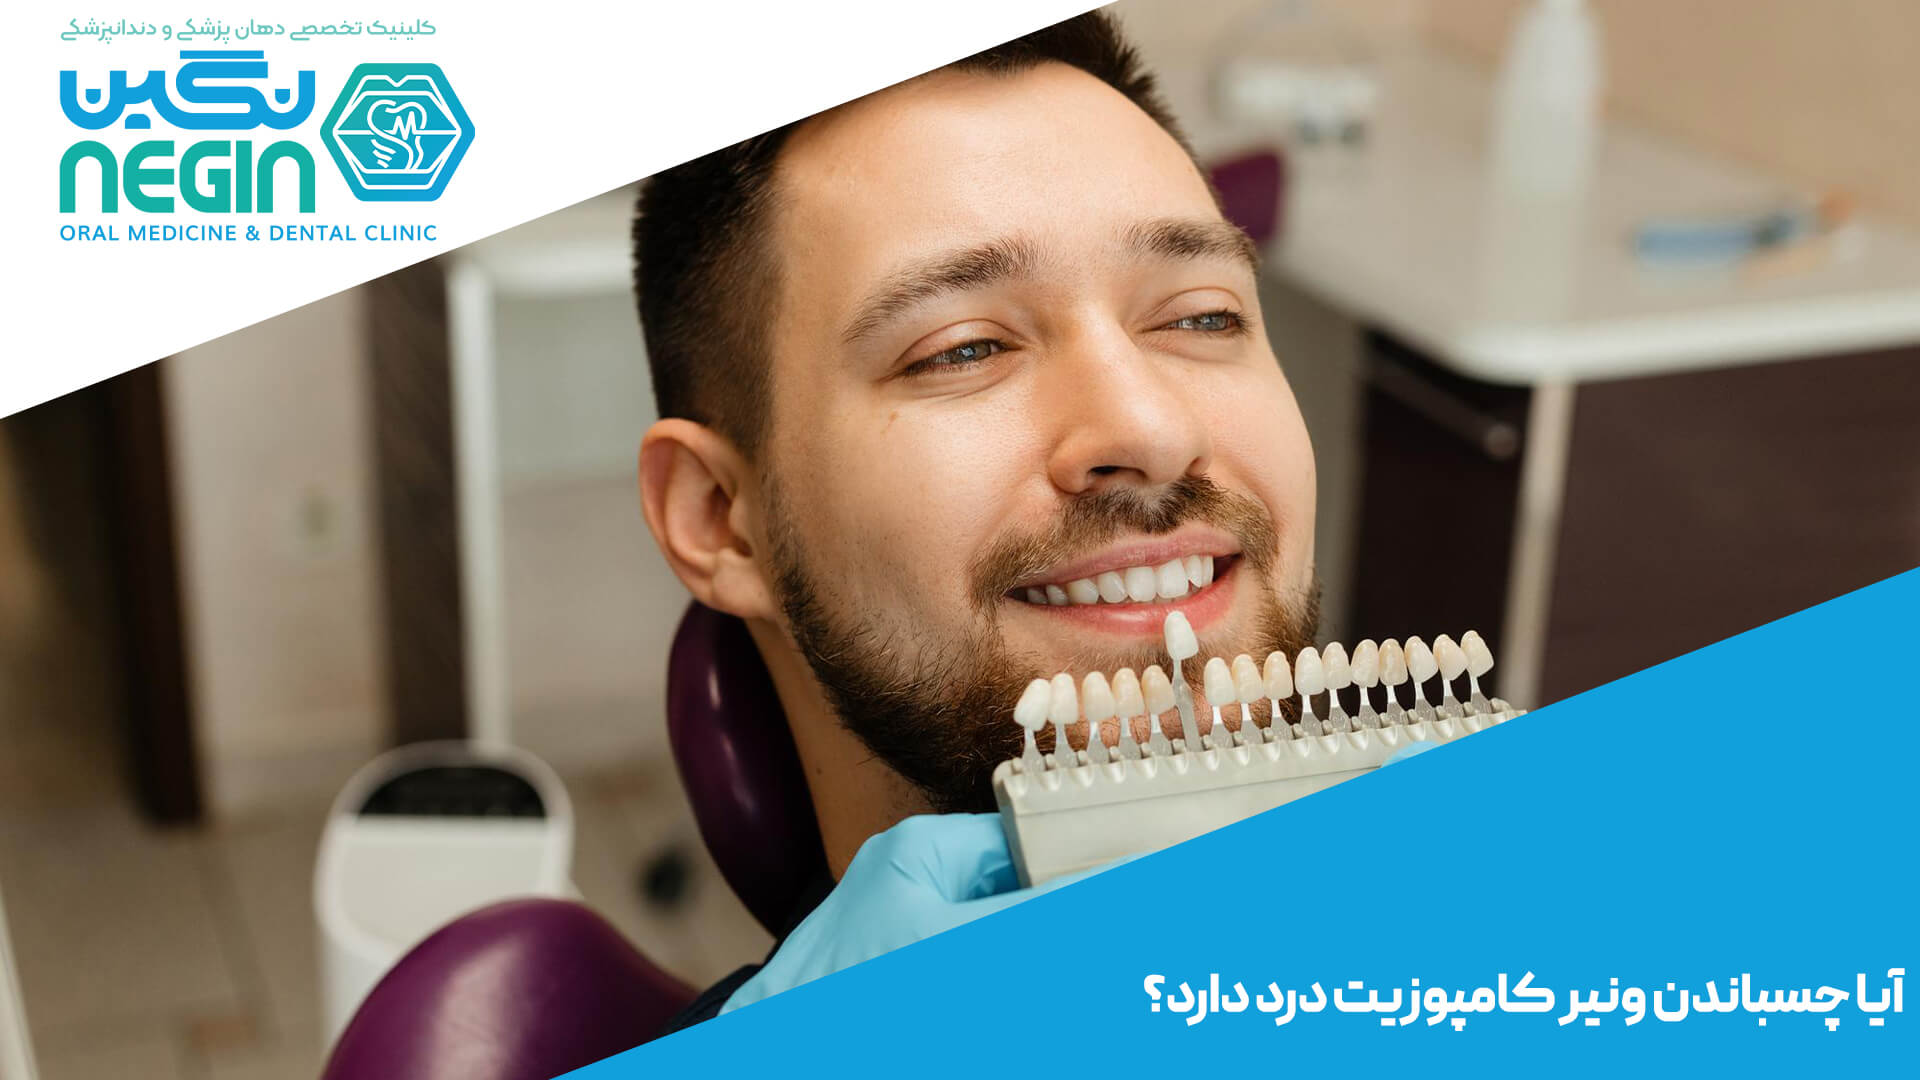 دوام ونیر کامپوزیت و عوامل موثر بر آن- کلینیک دندانپزشکی نگین